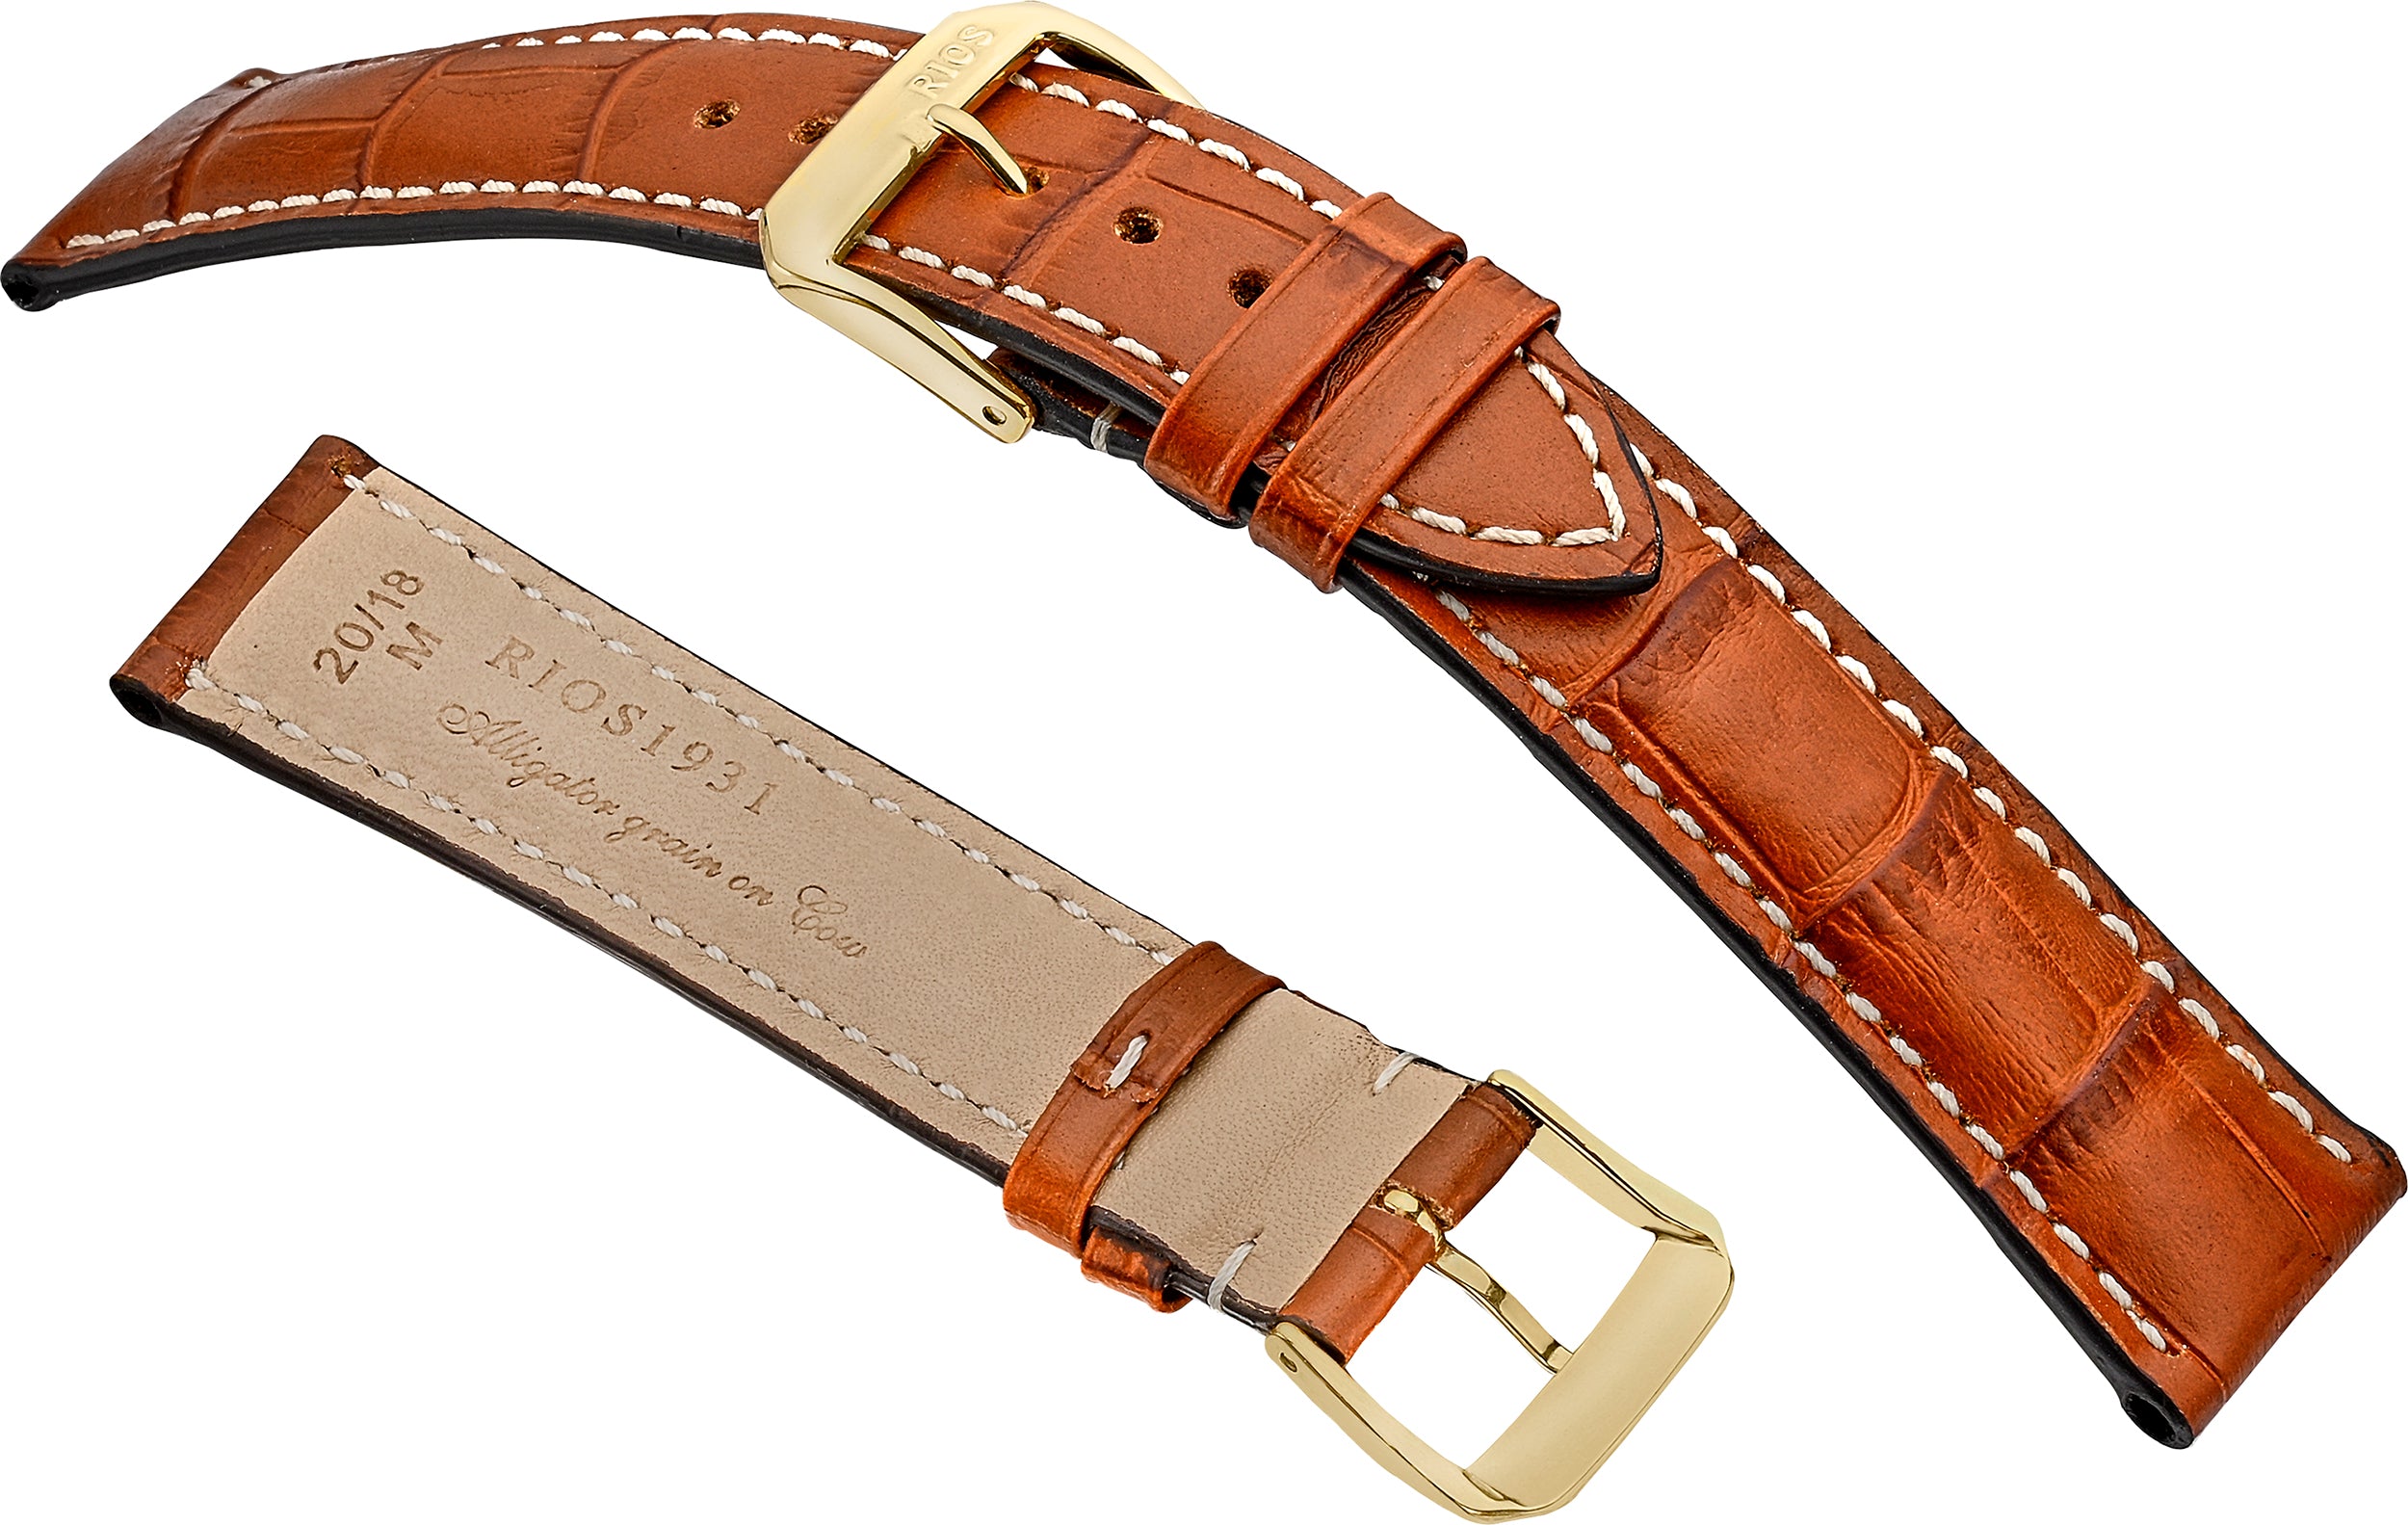 R51 NEW ORLEANS watch strap